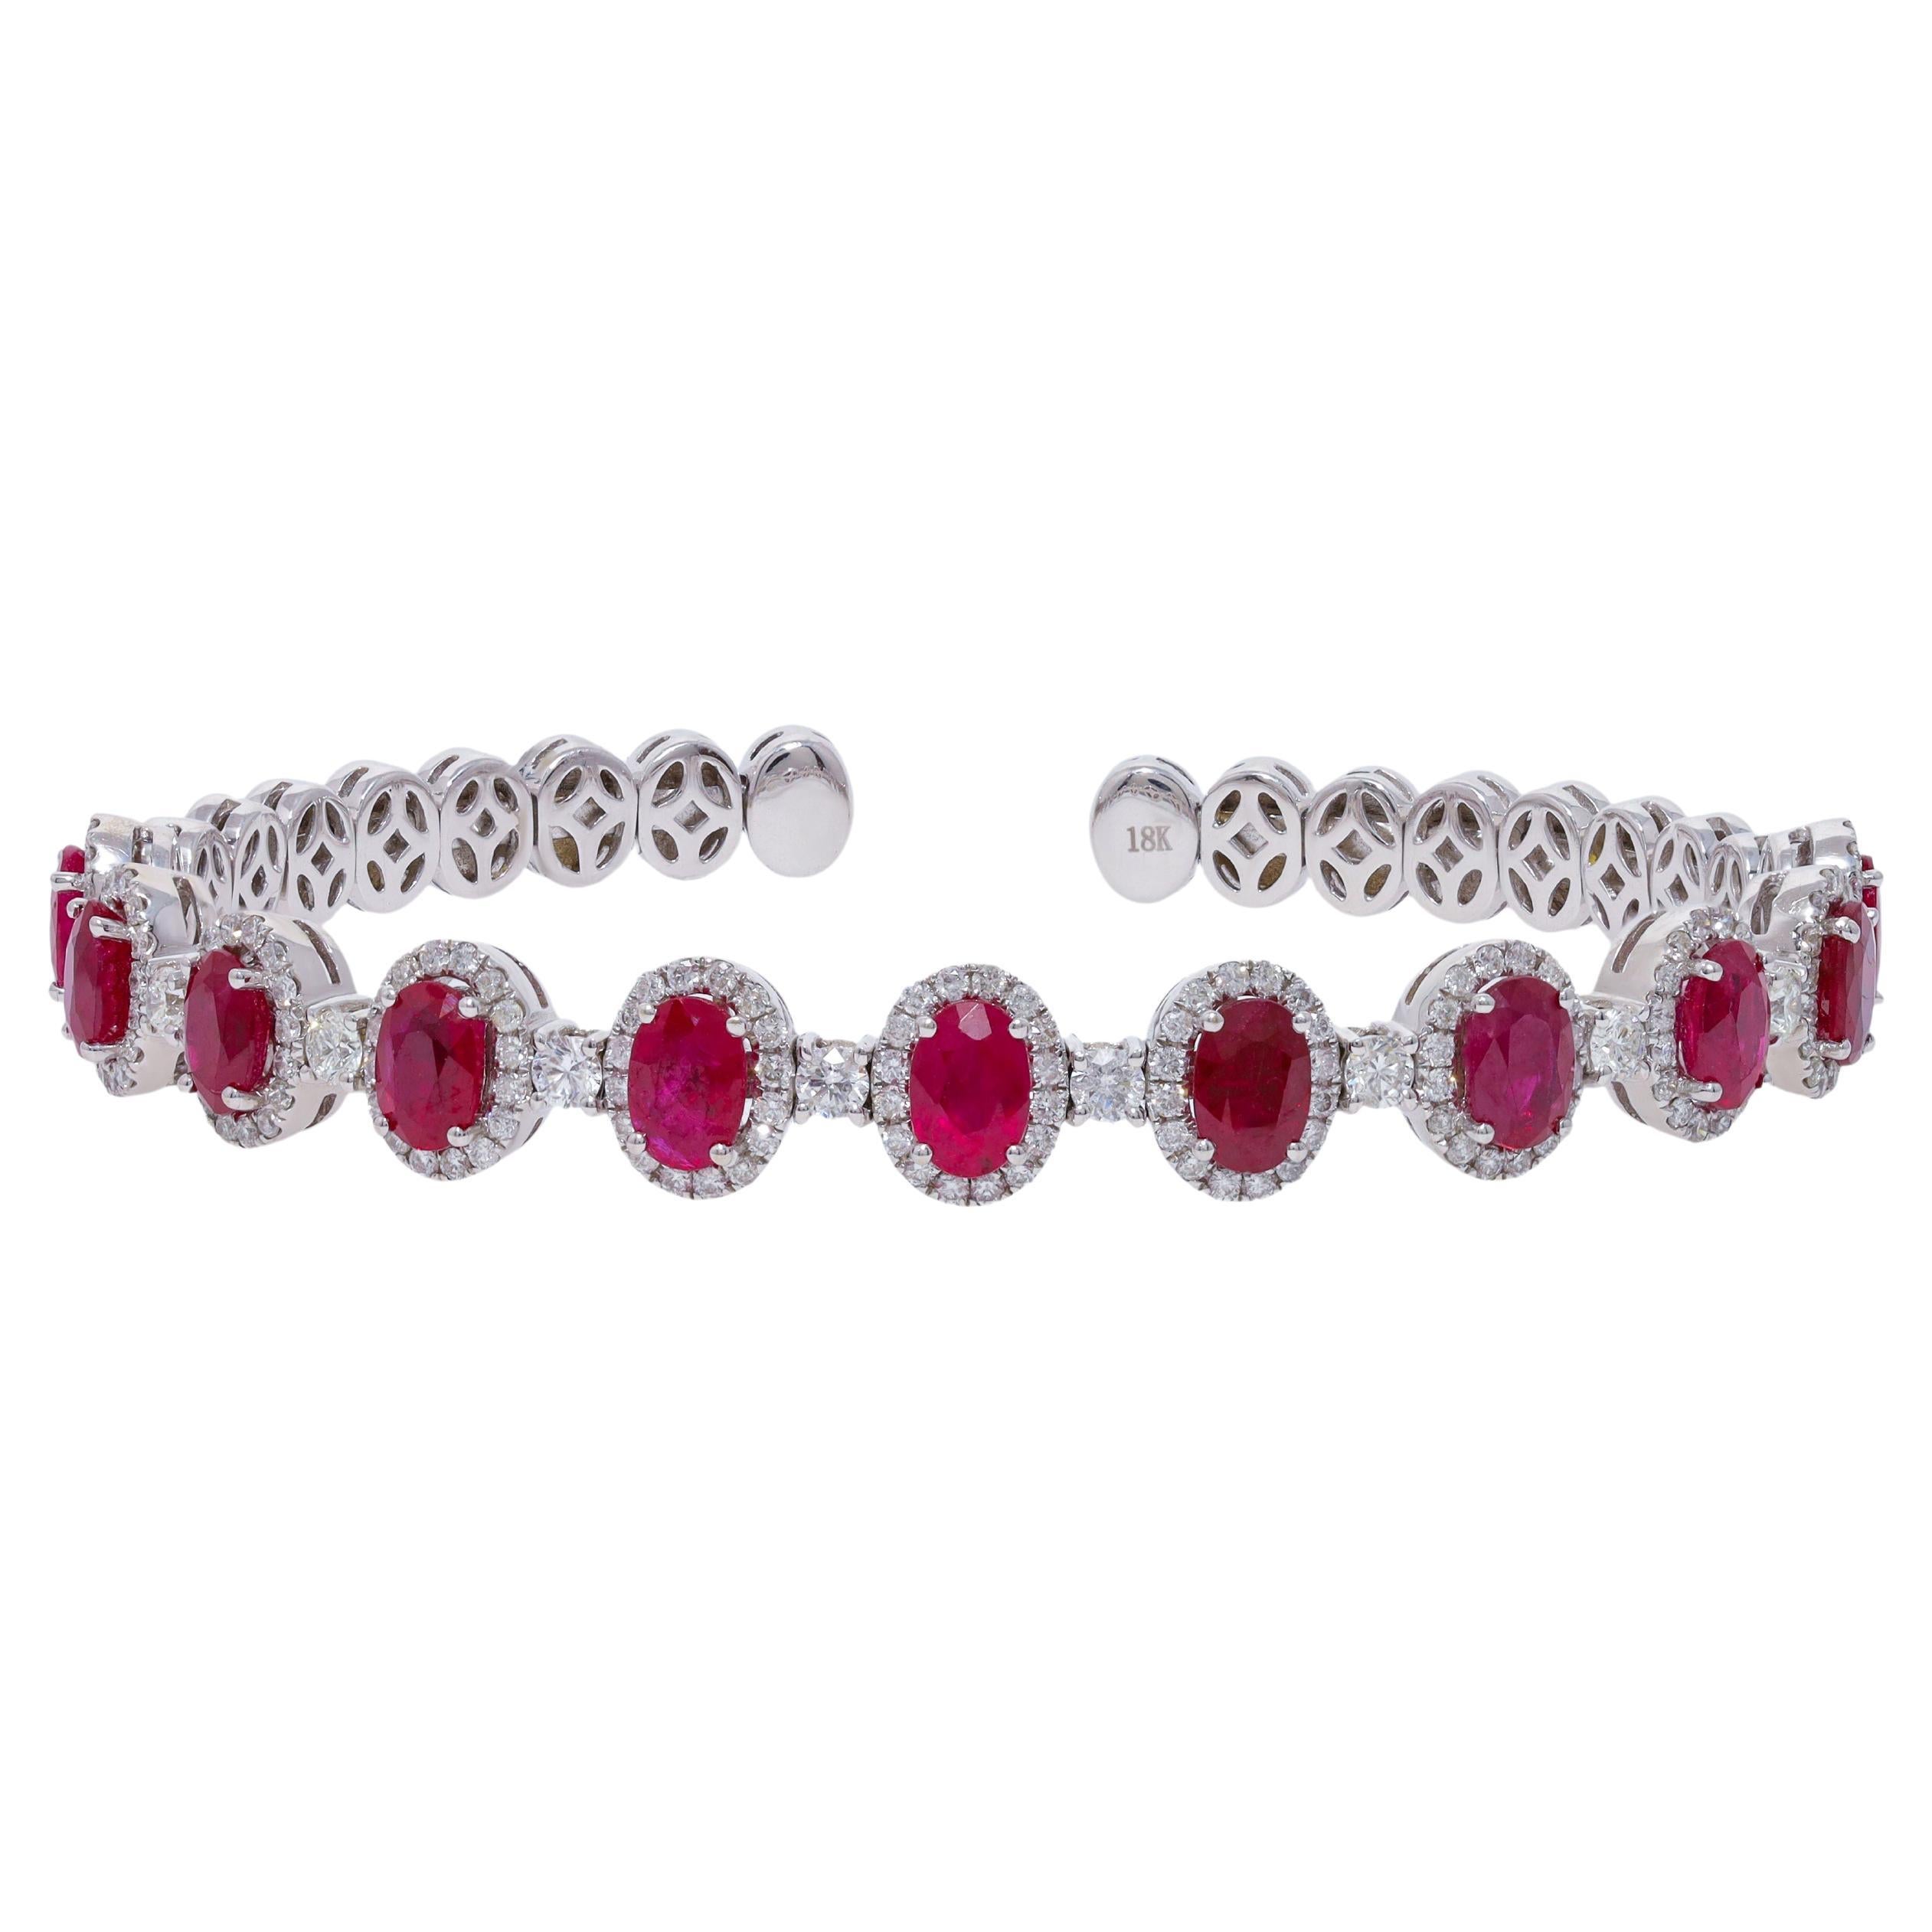 Diana M. 6.46 Carat Ruby Diamond Bracelet in White Gold For Sale